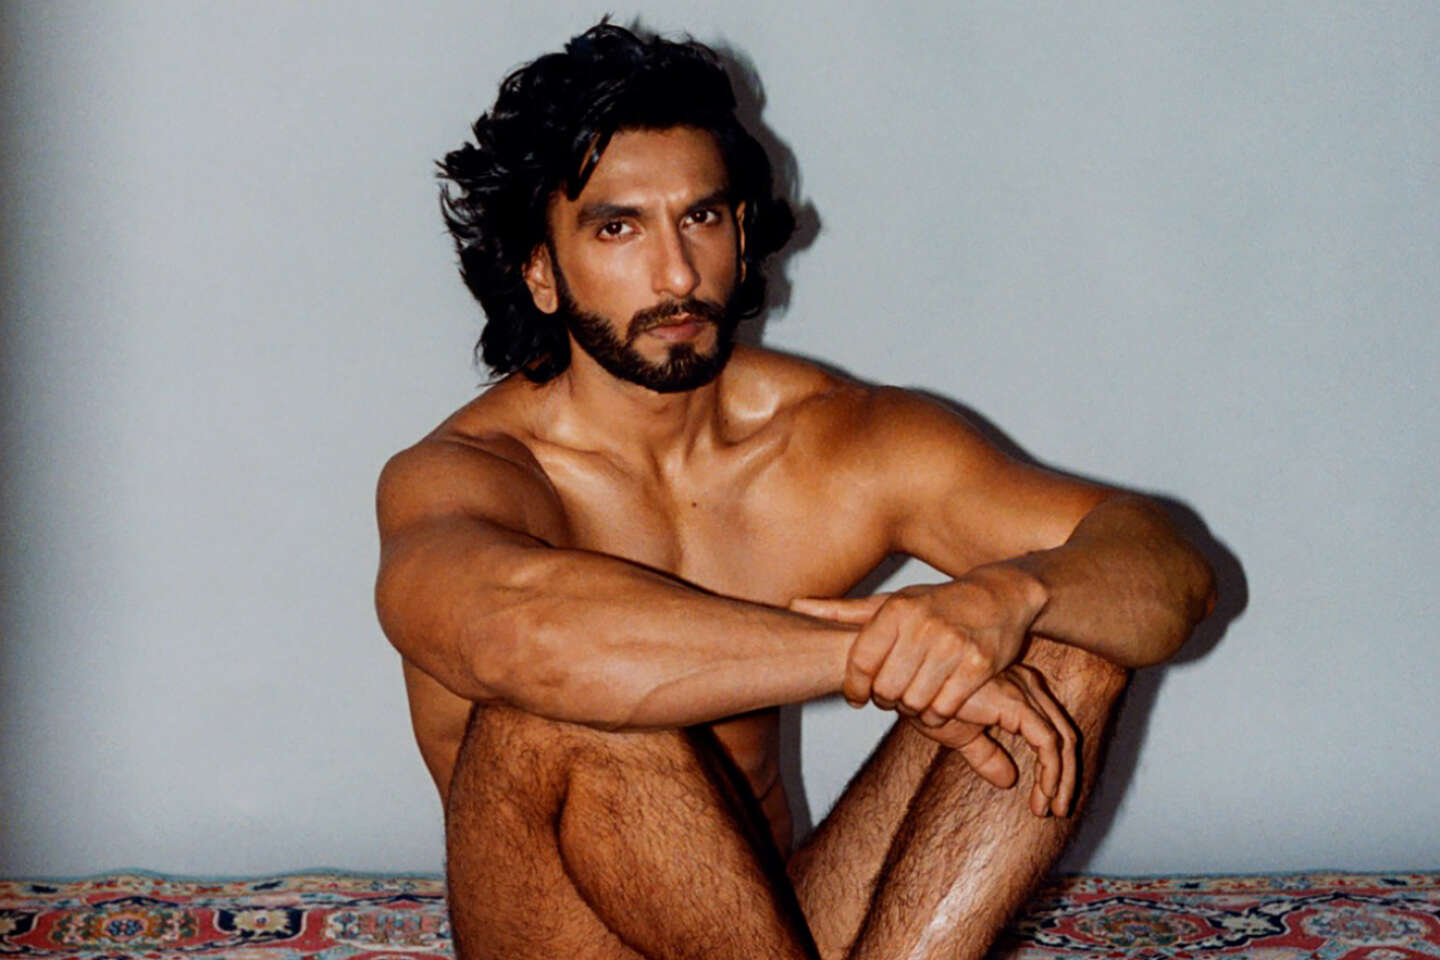 Bollywood Paradise Sex - Nude photos of a Bollywood actor are setting India abuzz